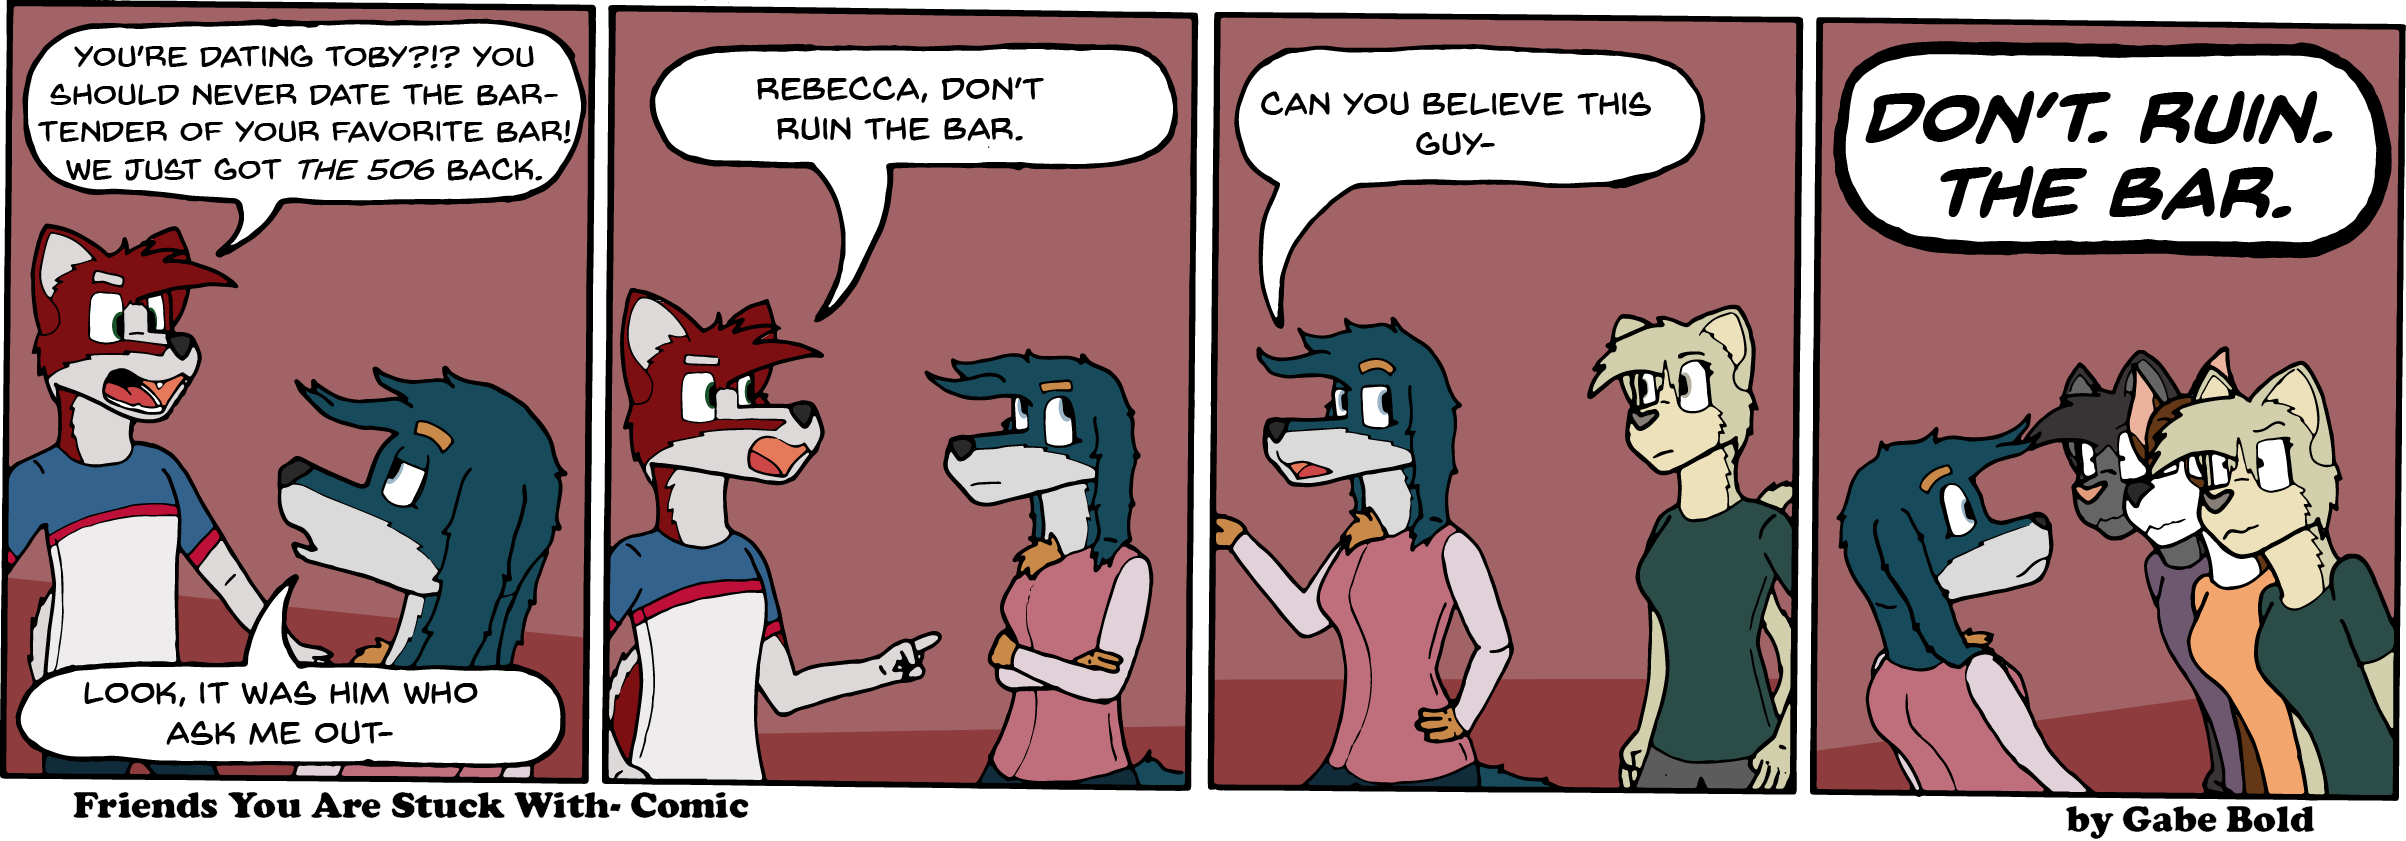 Don't ruin the bar Rebecca.